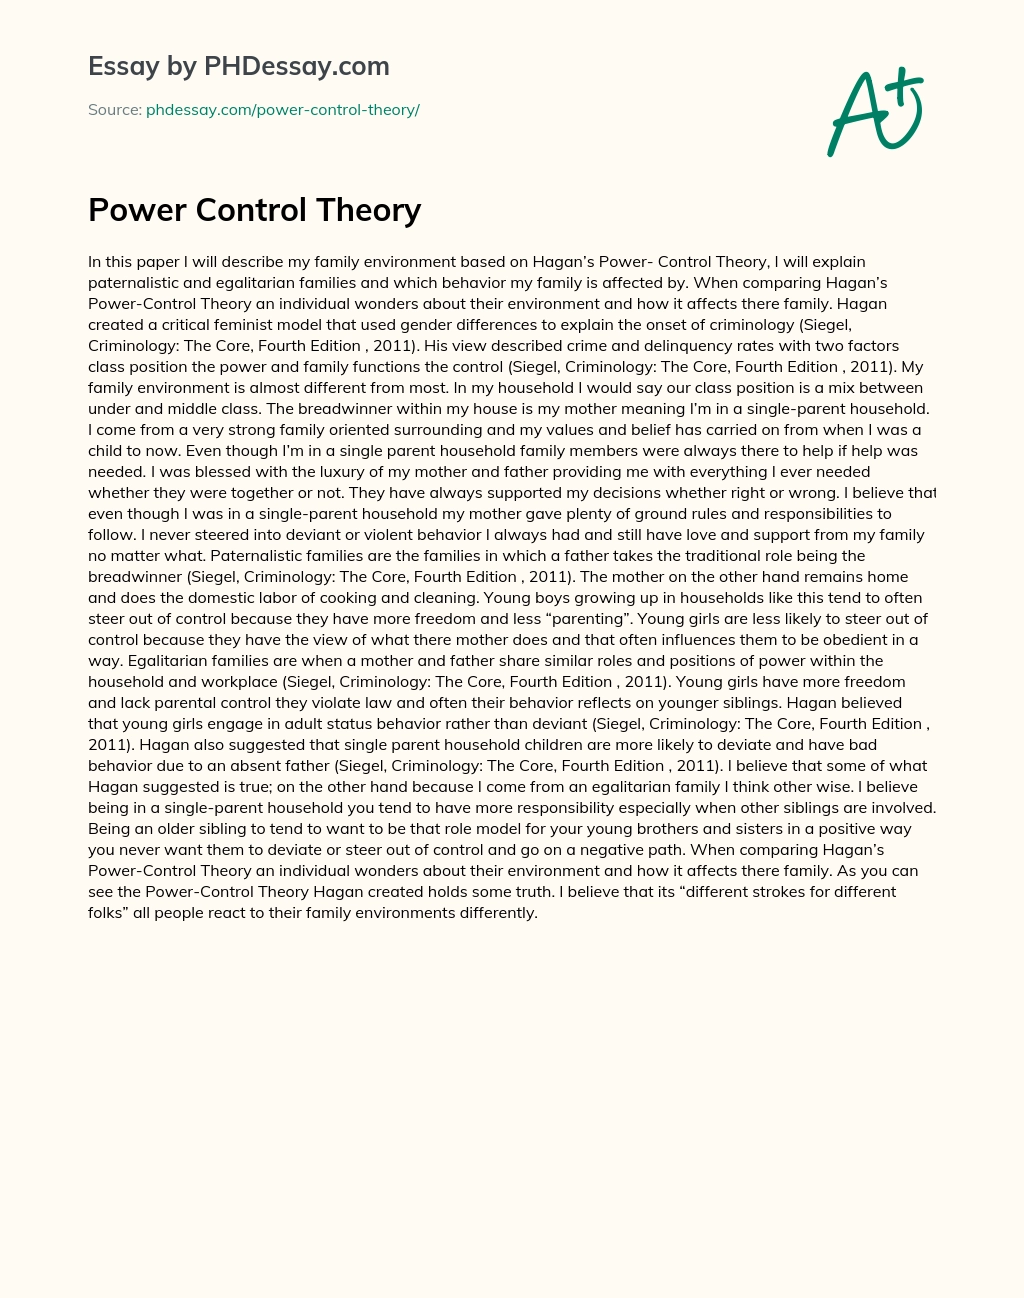 Power Control Theory essay